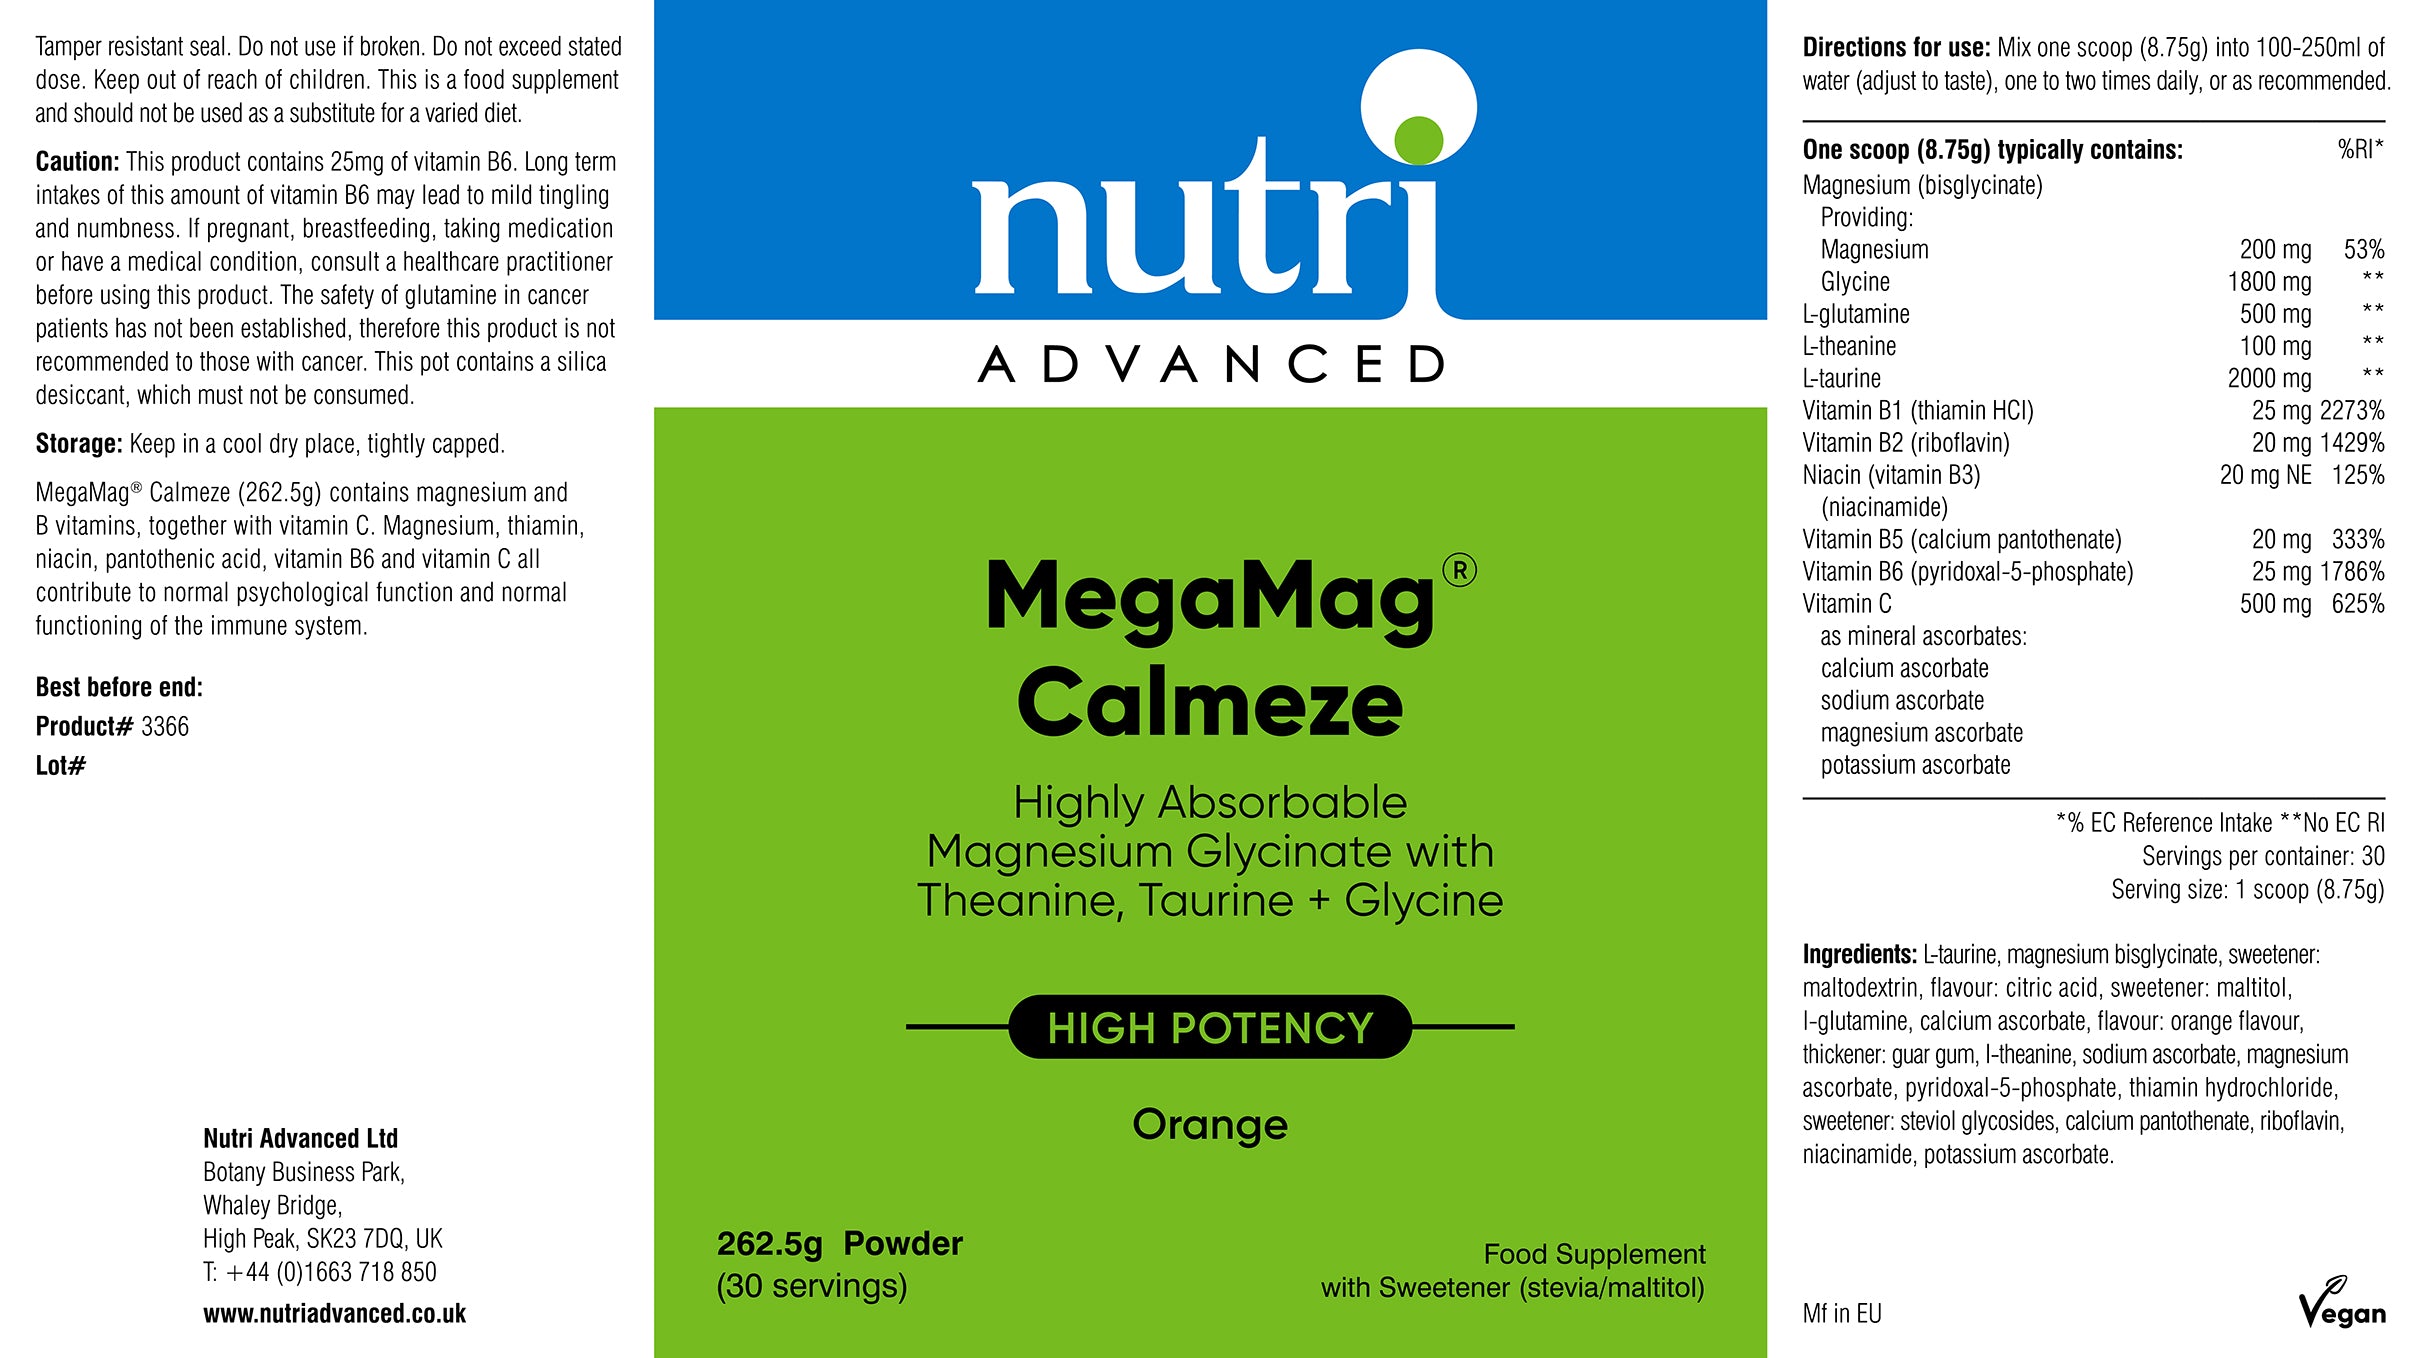 Nutri Advanced MegaMag Calmeze Orange 262.5g